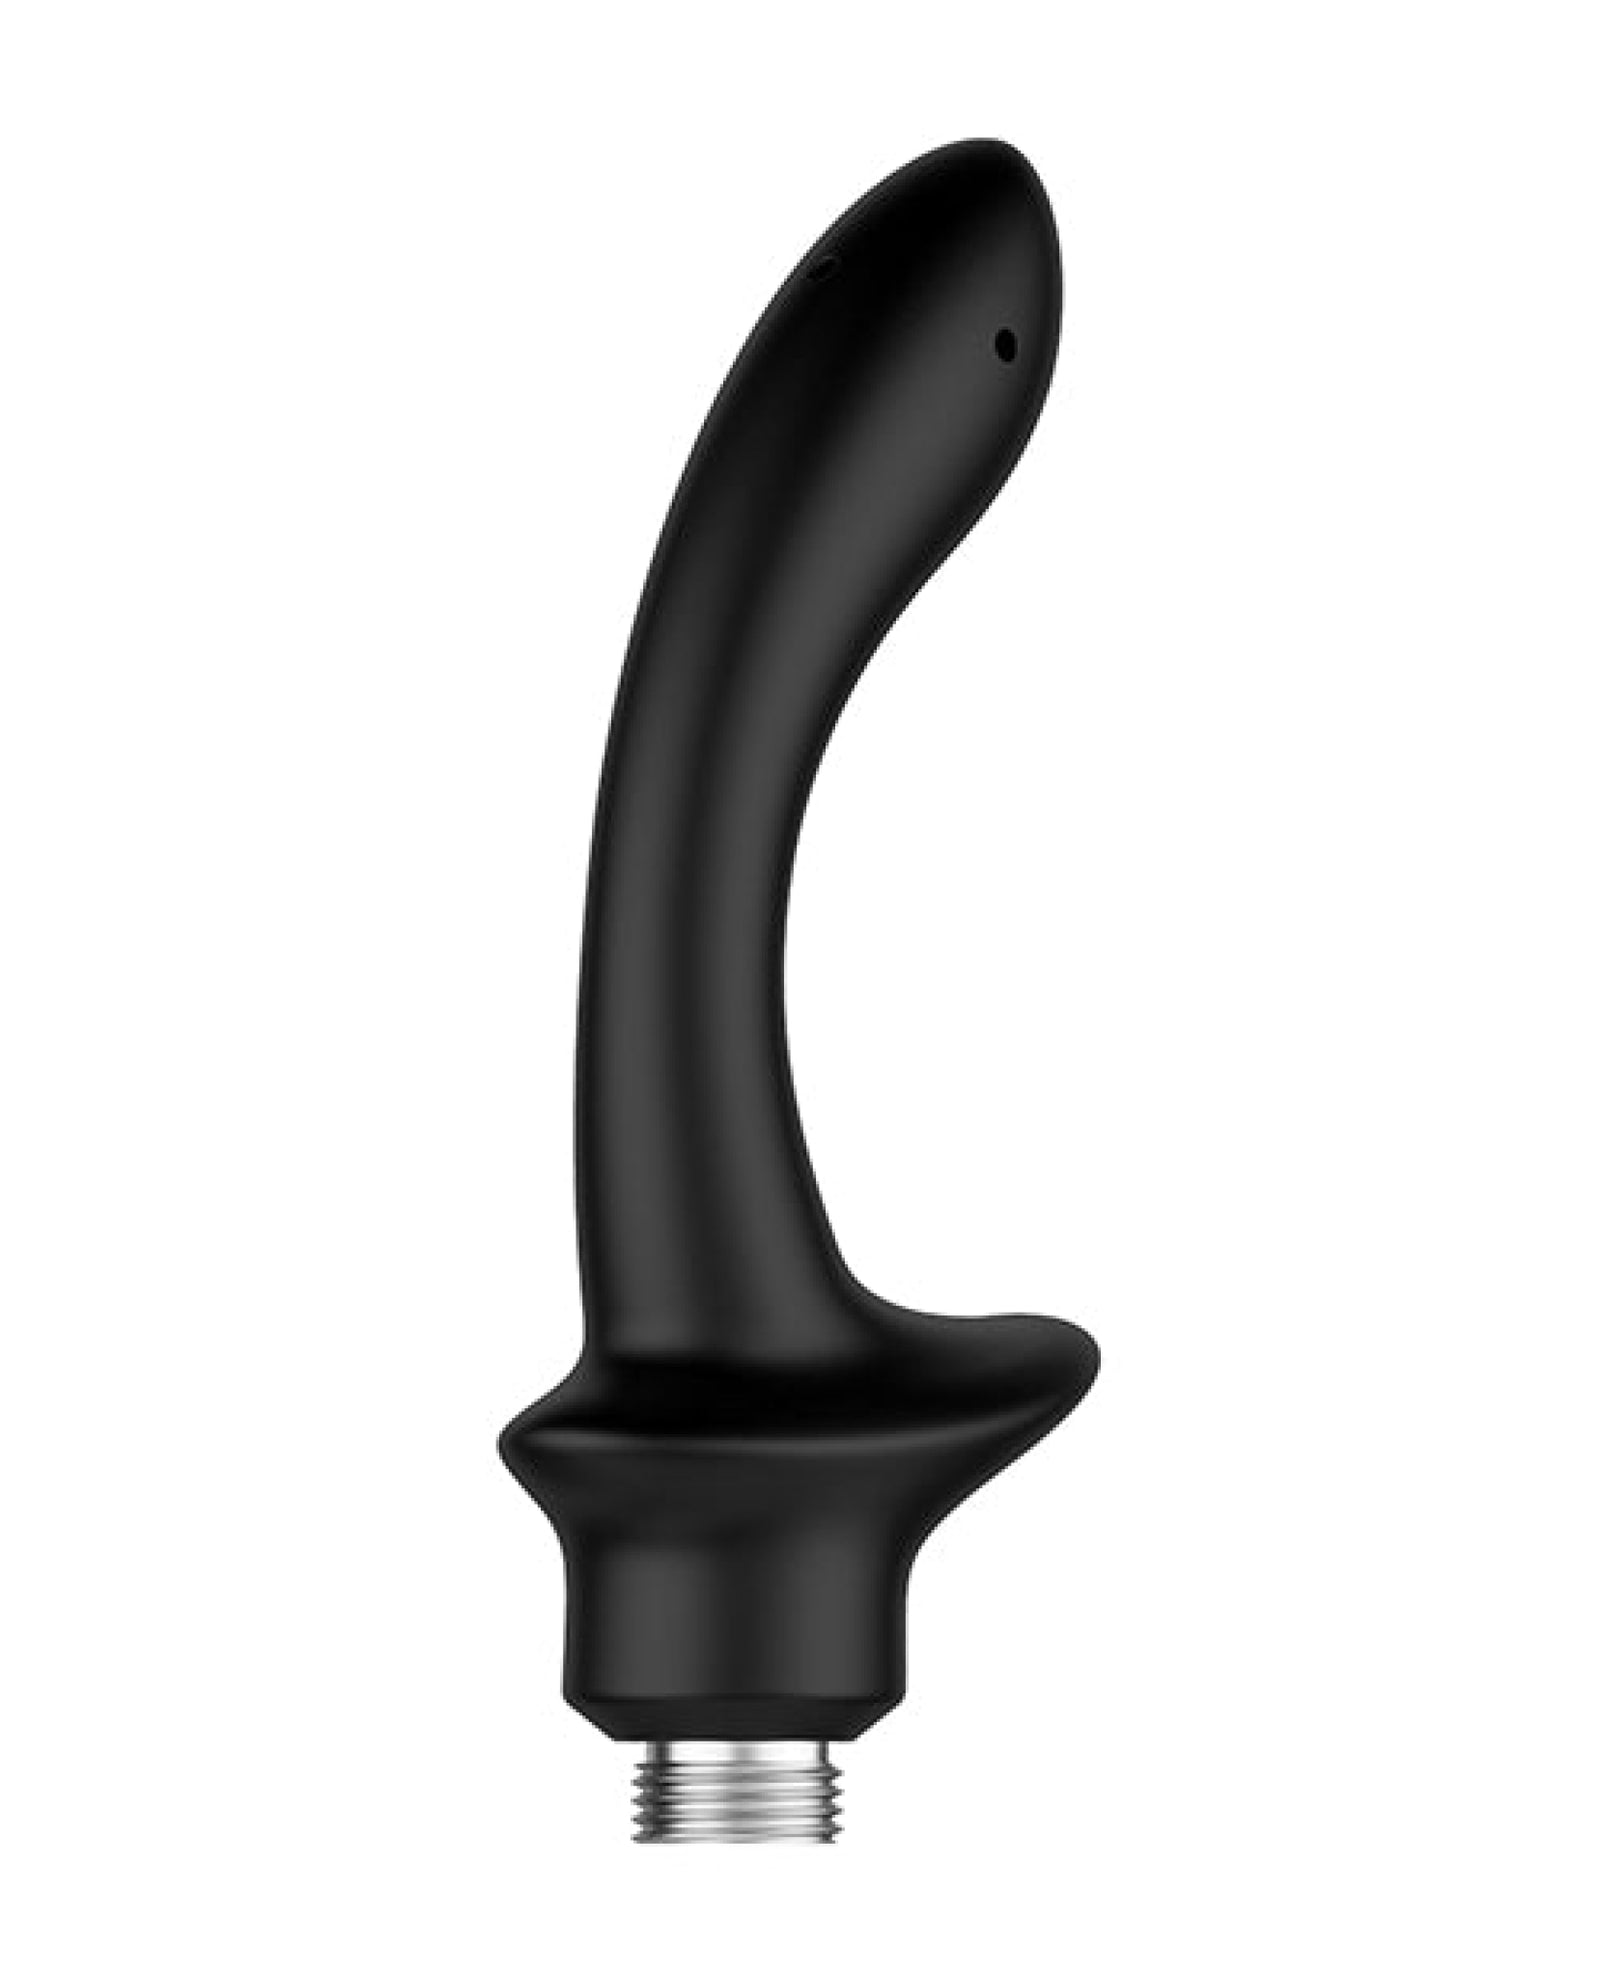 Nexus Beginner Shower Douche Kit - Black Nexus